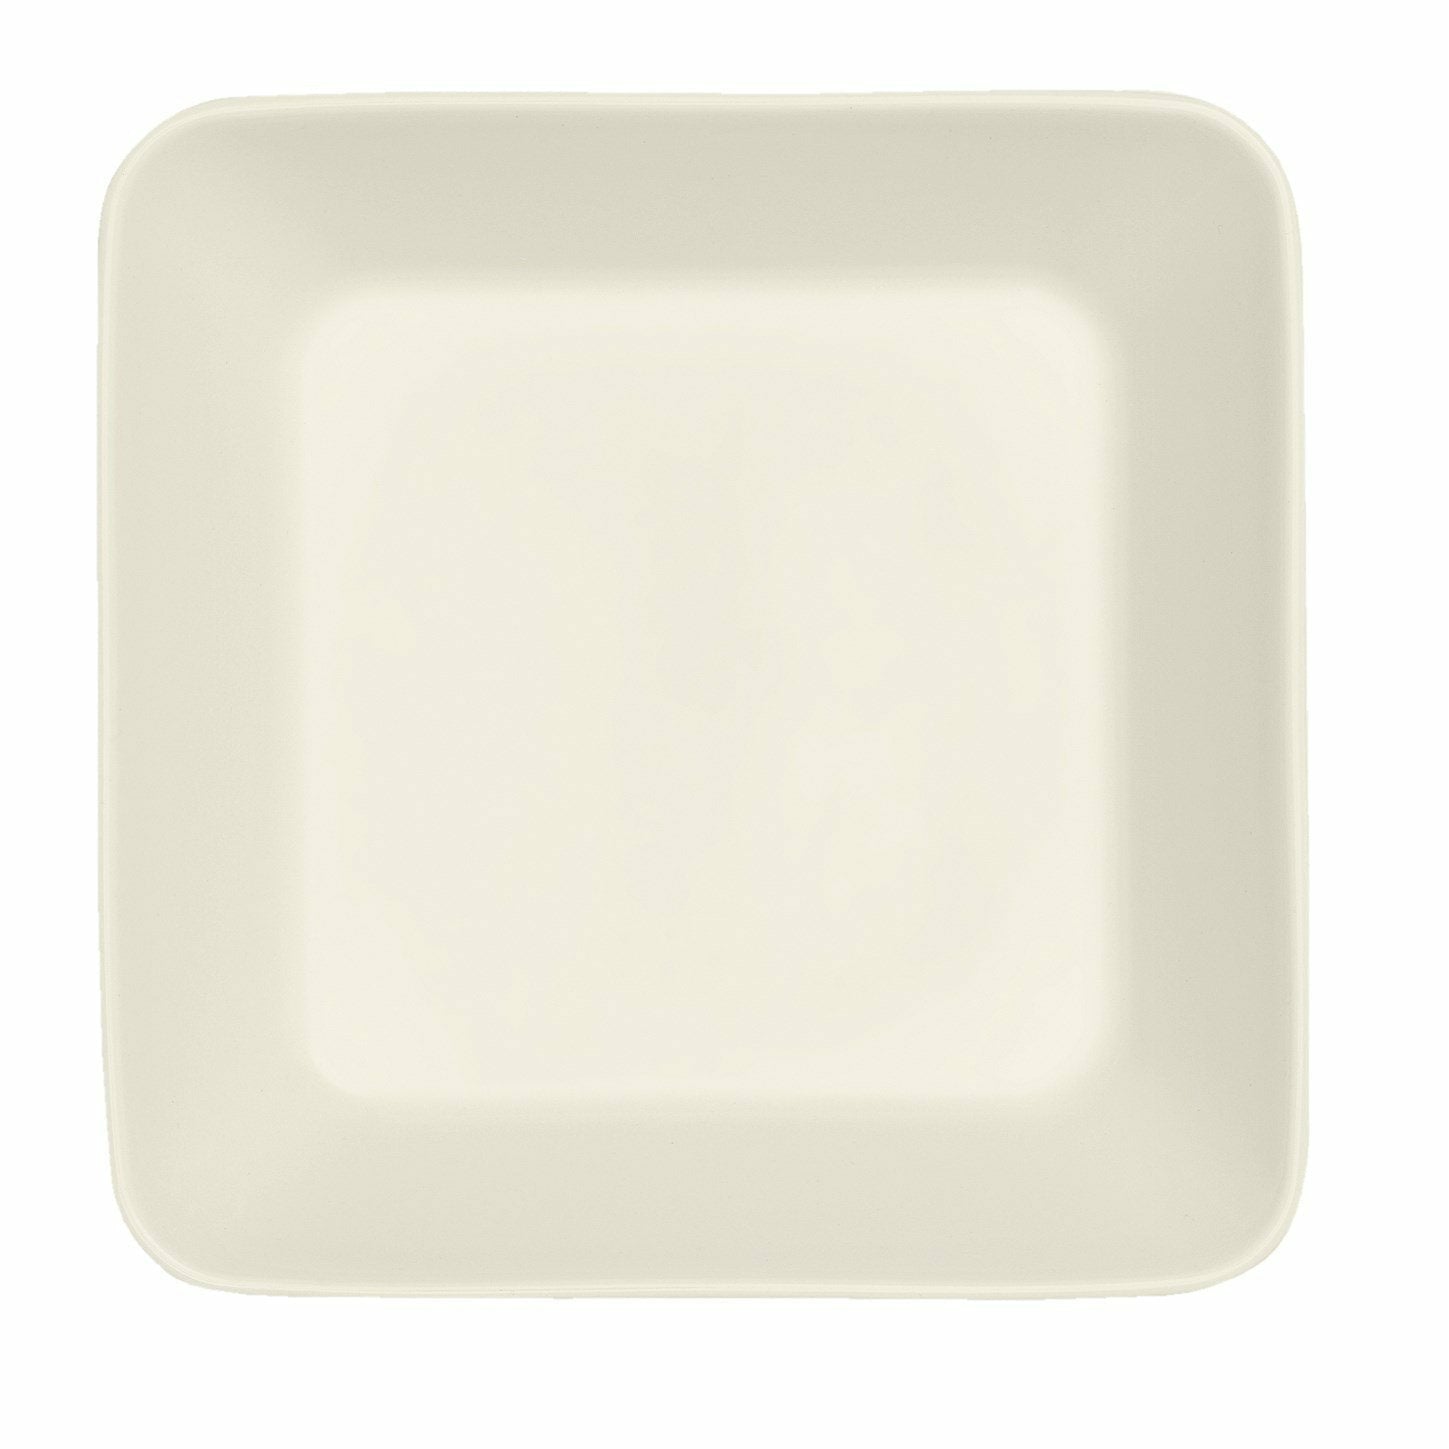 Iittala Teema Bowl White, 16cm